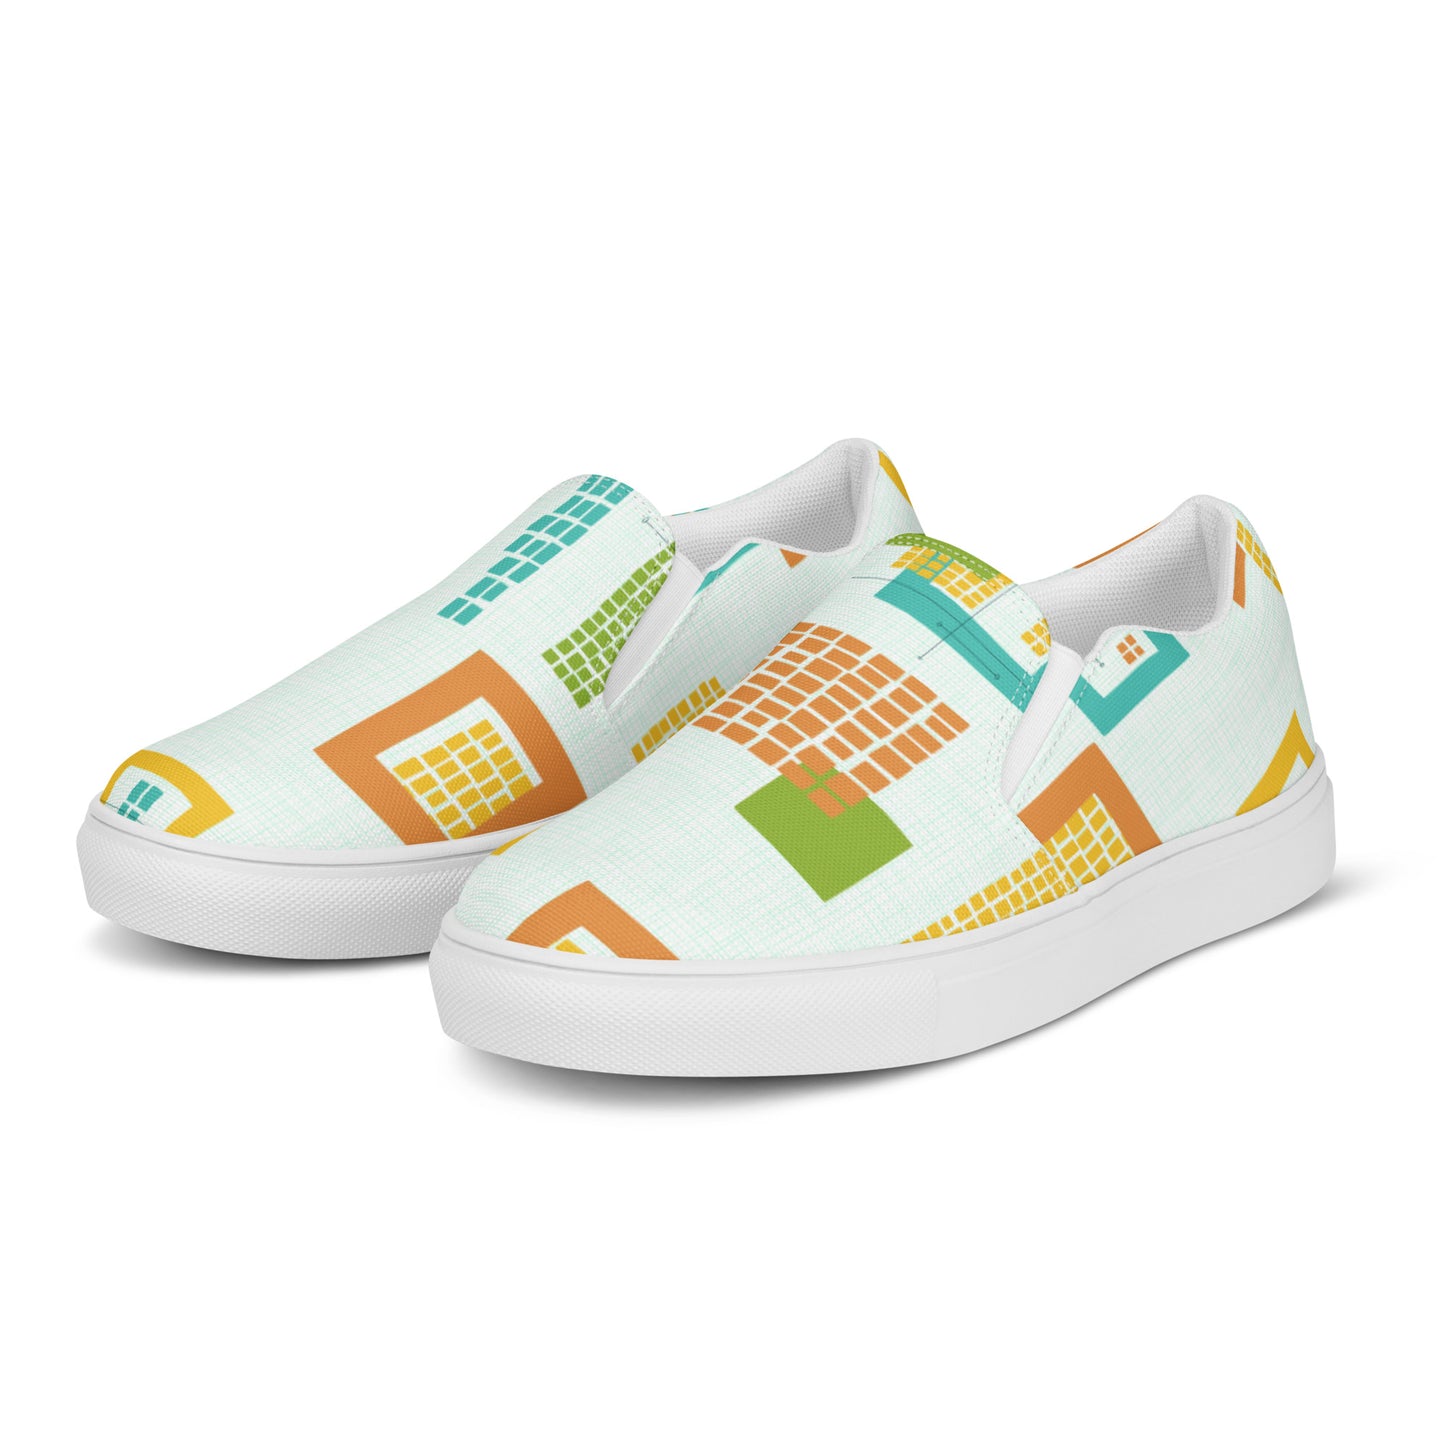 Ojai '48 Women’s slip-on canvas shoes